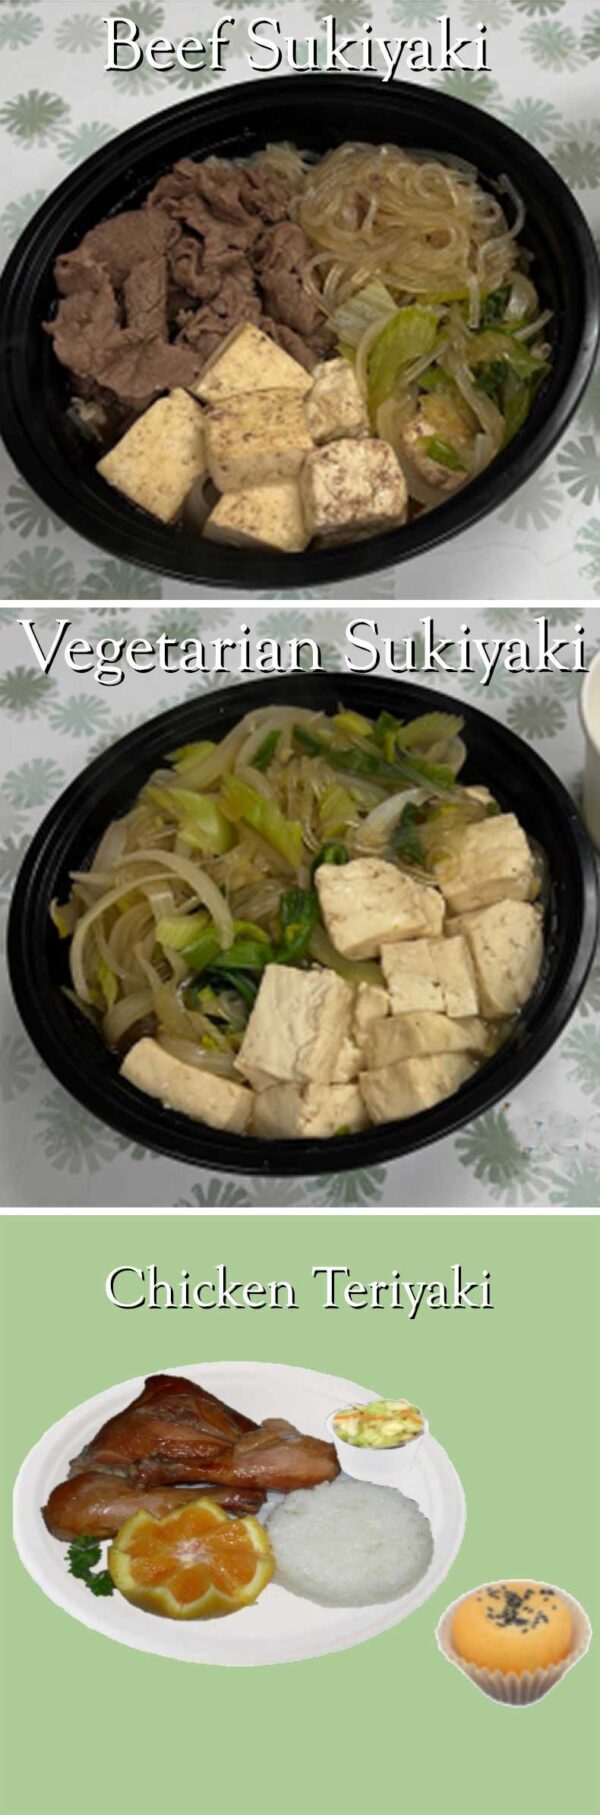 Beef Sukiyaki, Vegetarian Sukiyaki, Chicken Teriyaki